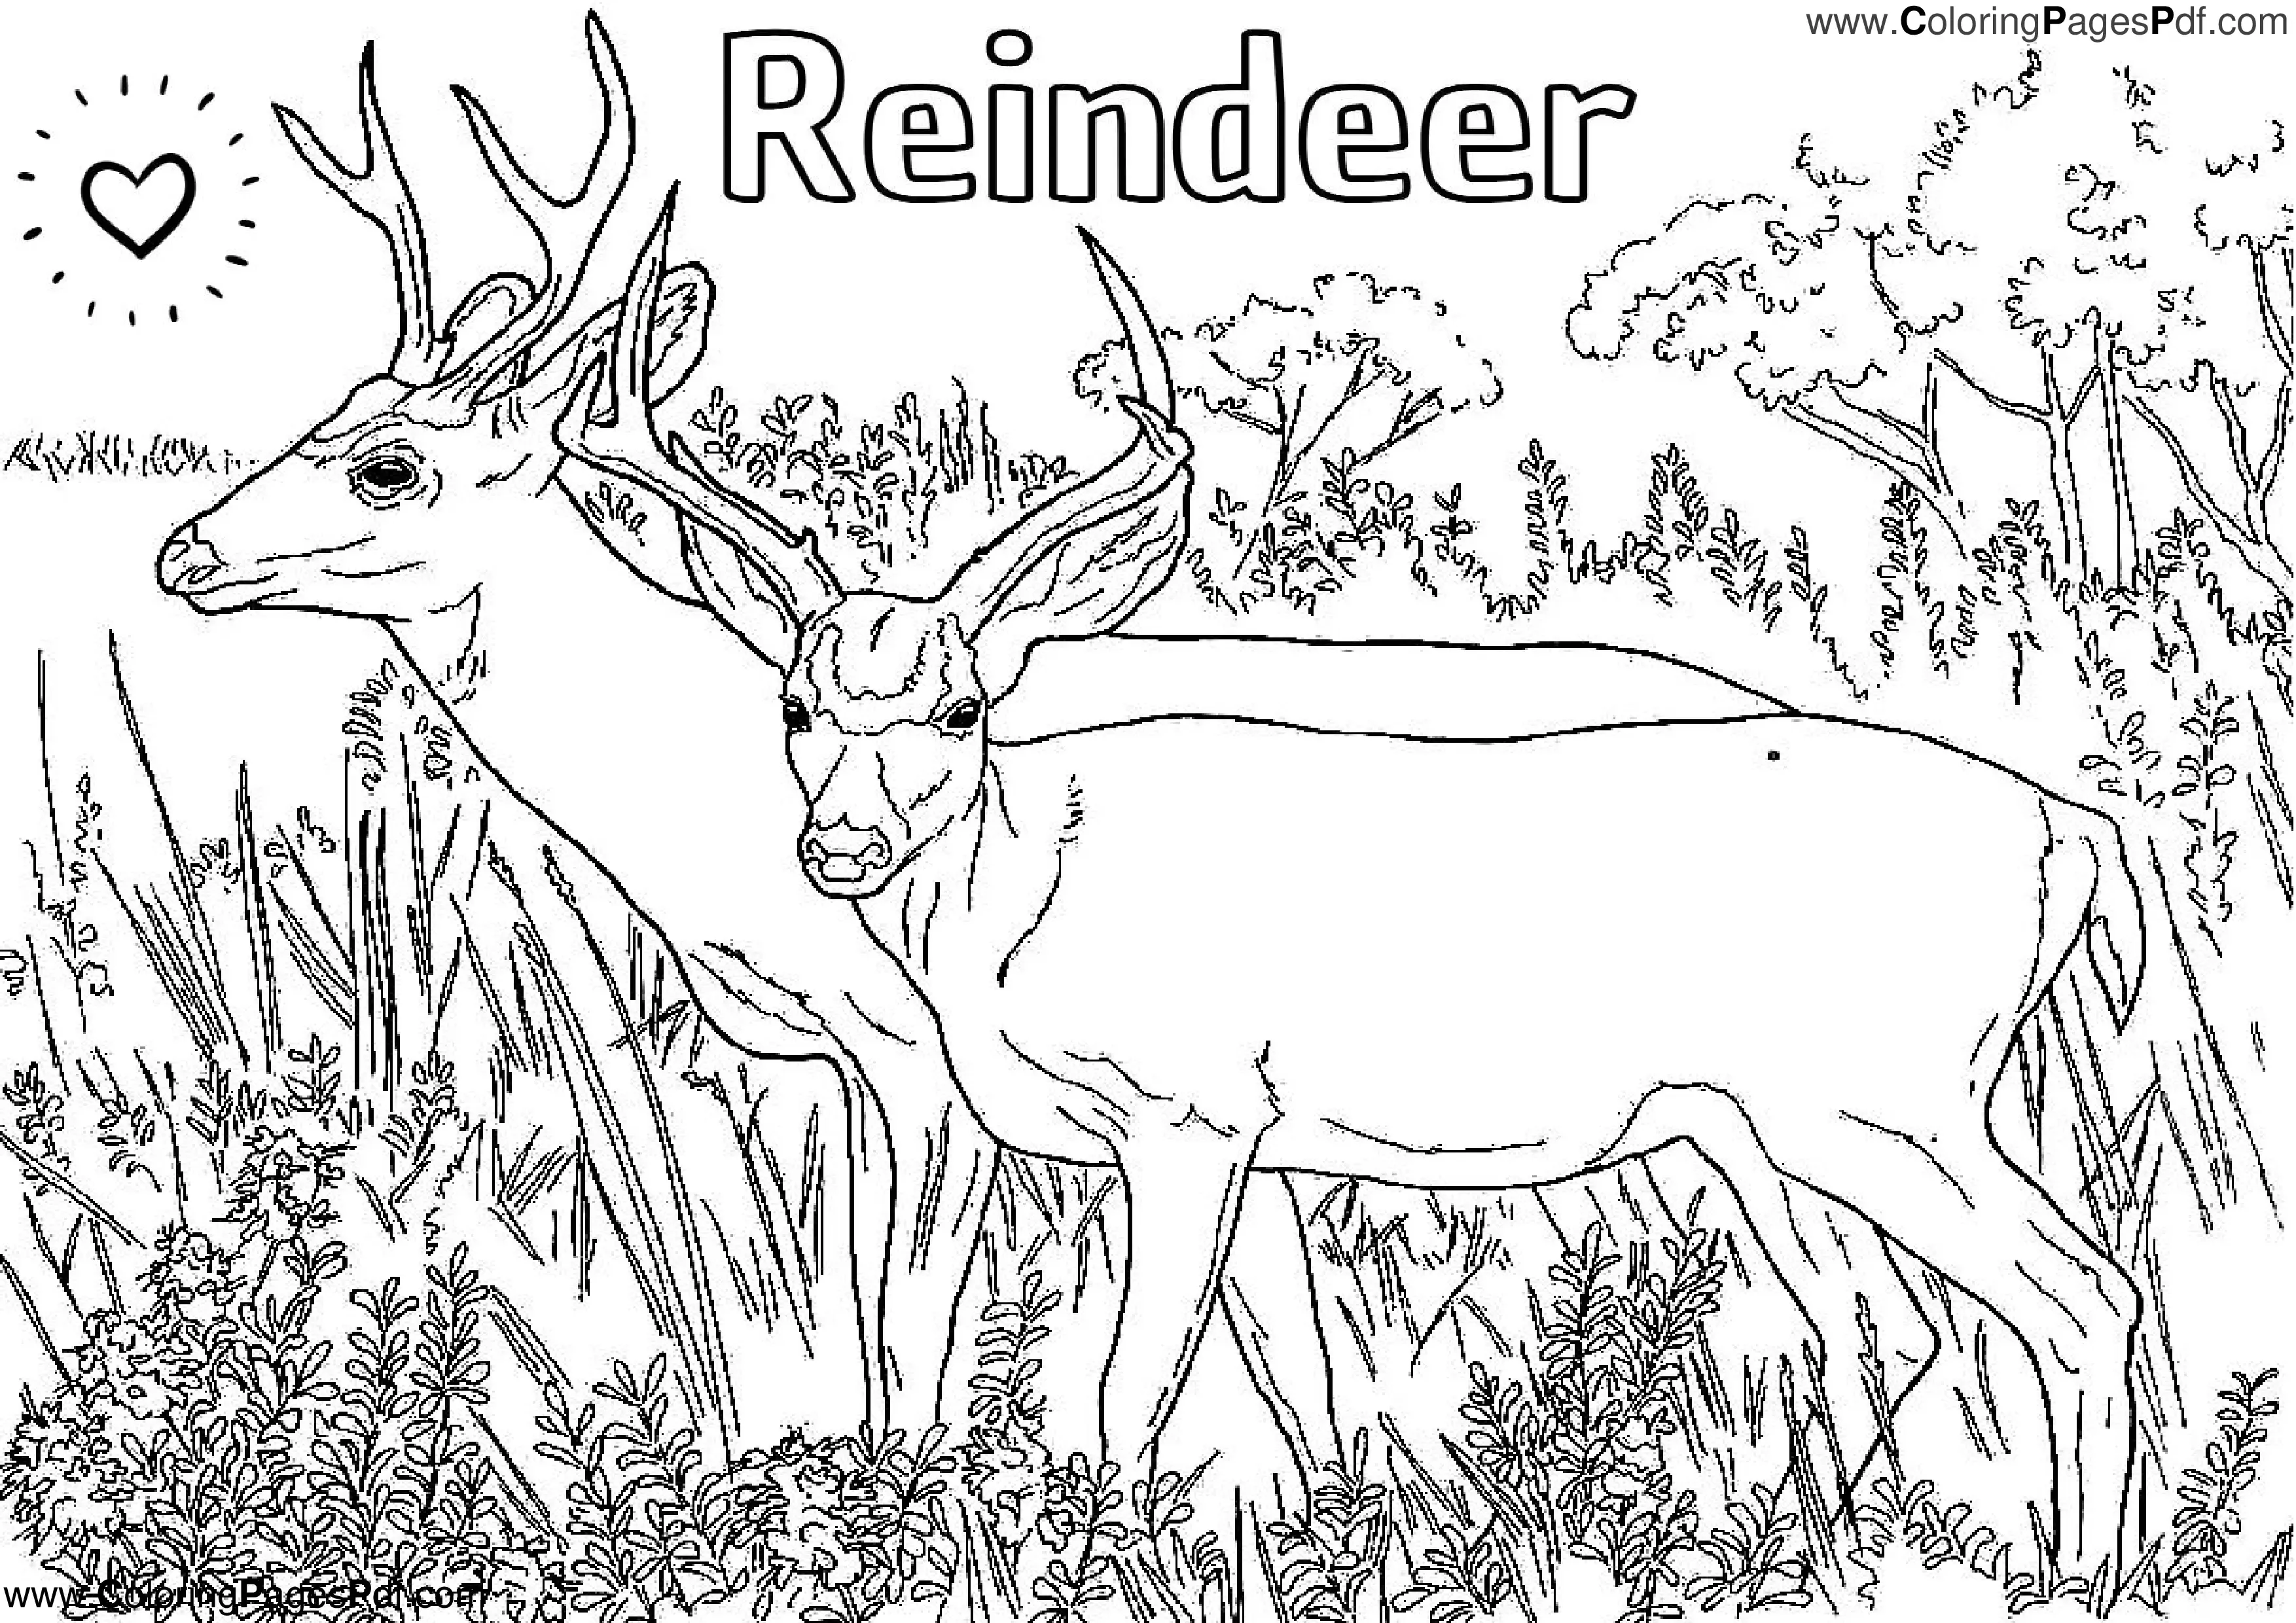 Reindeer coloring pages free